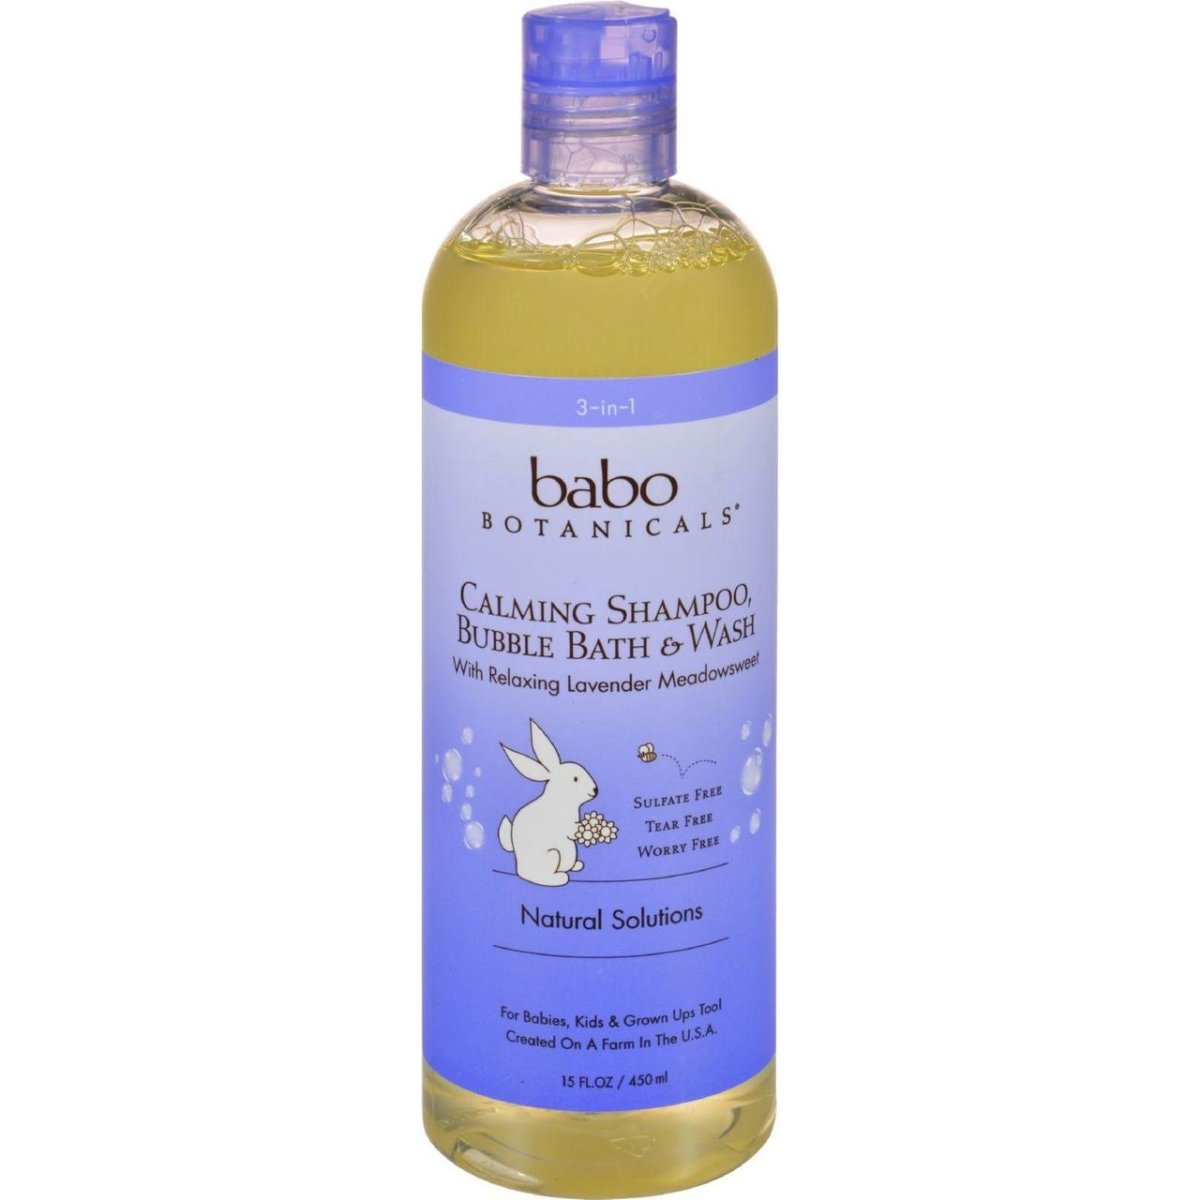 Hg1625615 15 Oz Shampoo Bubblebath & Wash - Calming, Lavender